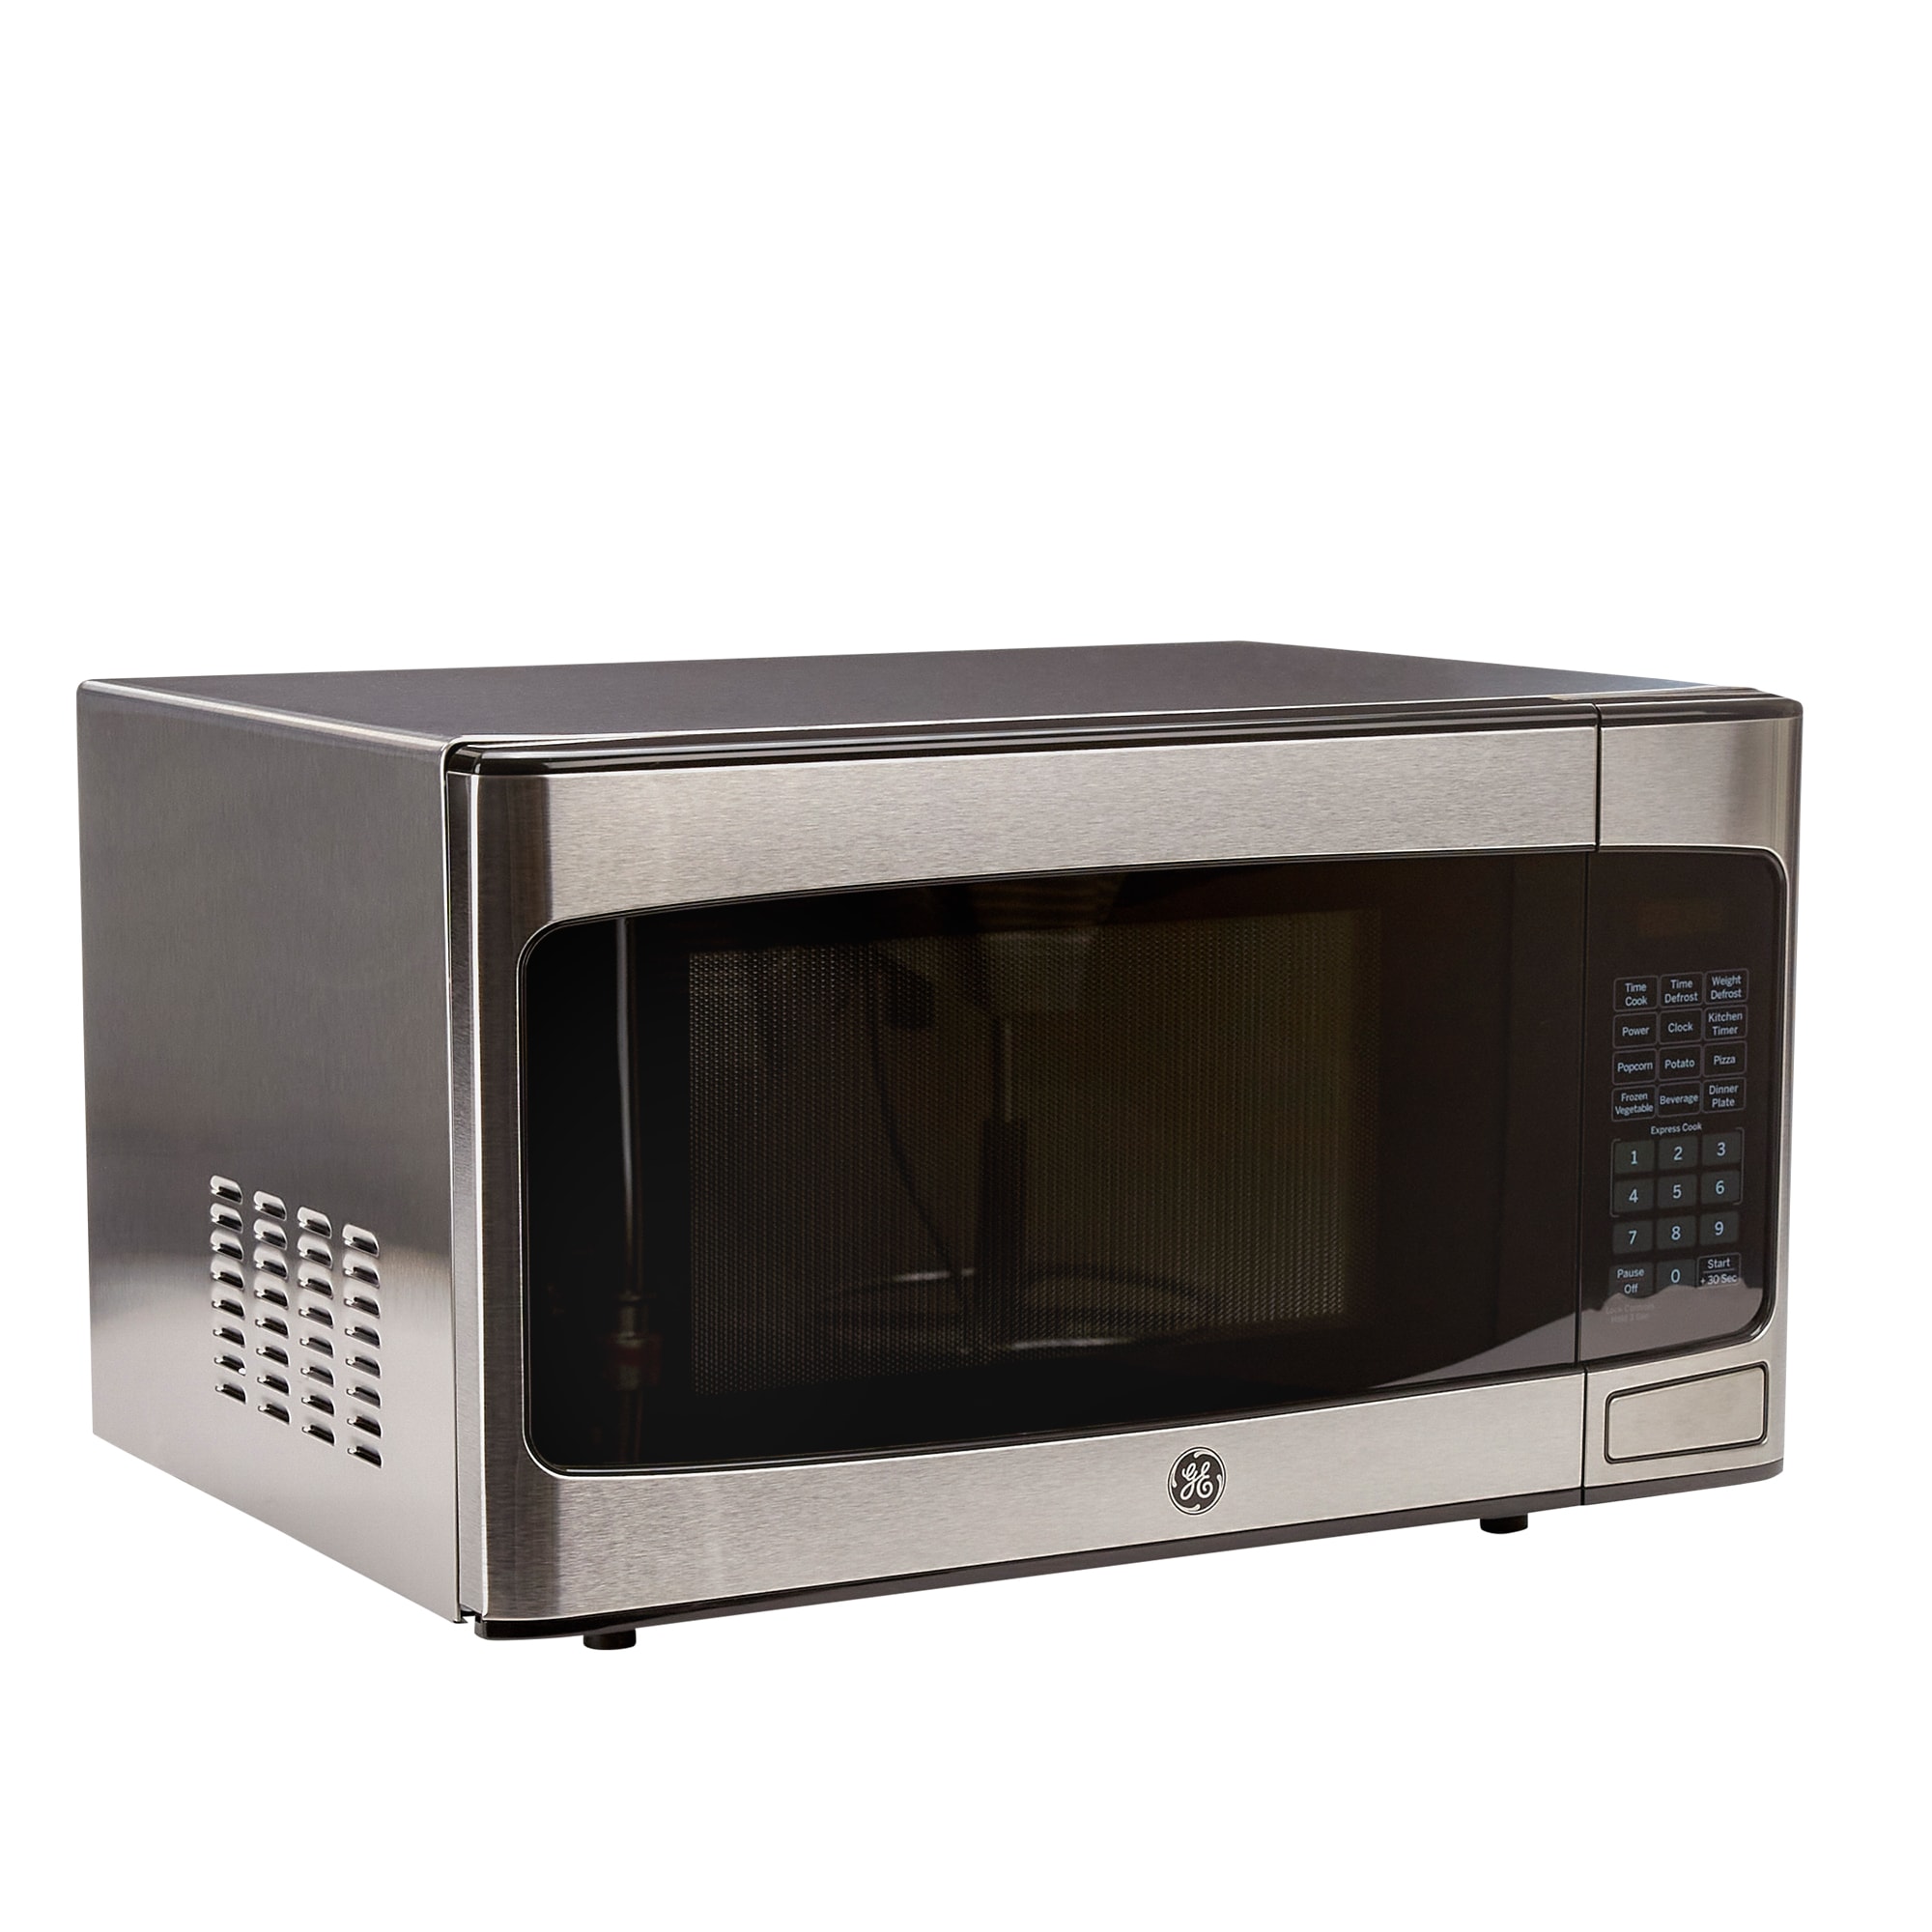 Best Buy: Samsung 1.4 cu. ft. Countertop Microwave with Sensor Cook  Stainless Steel MS14K6000AS